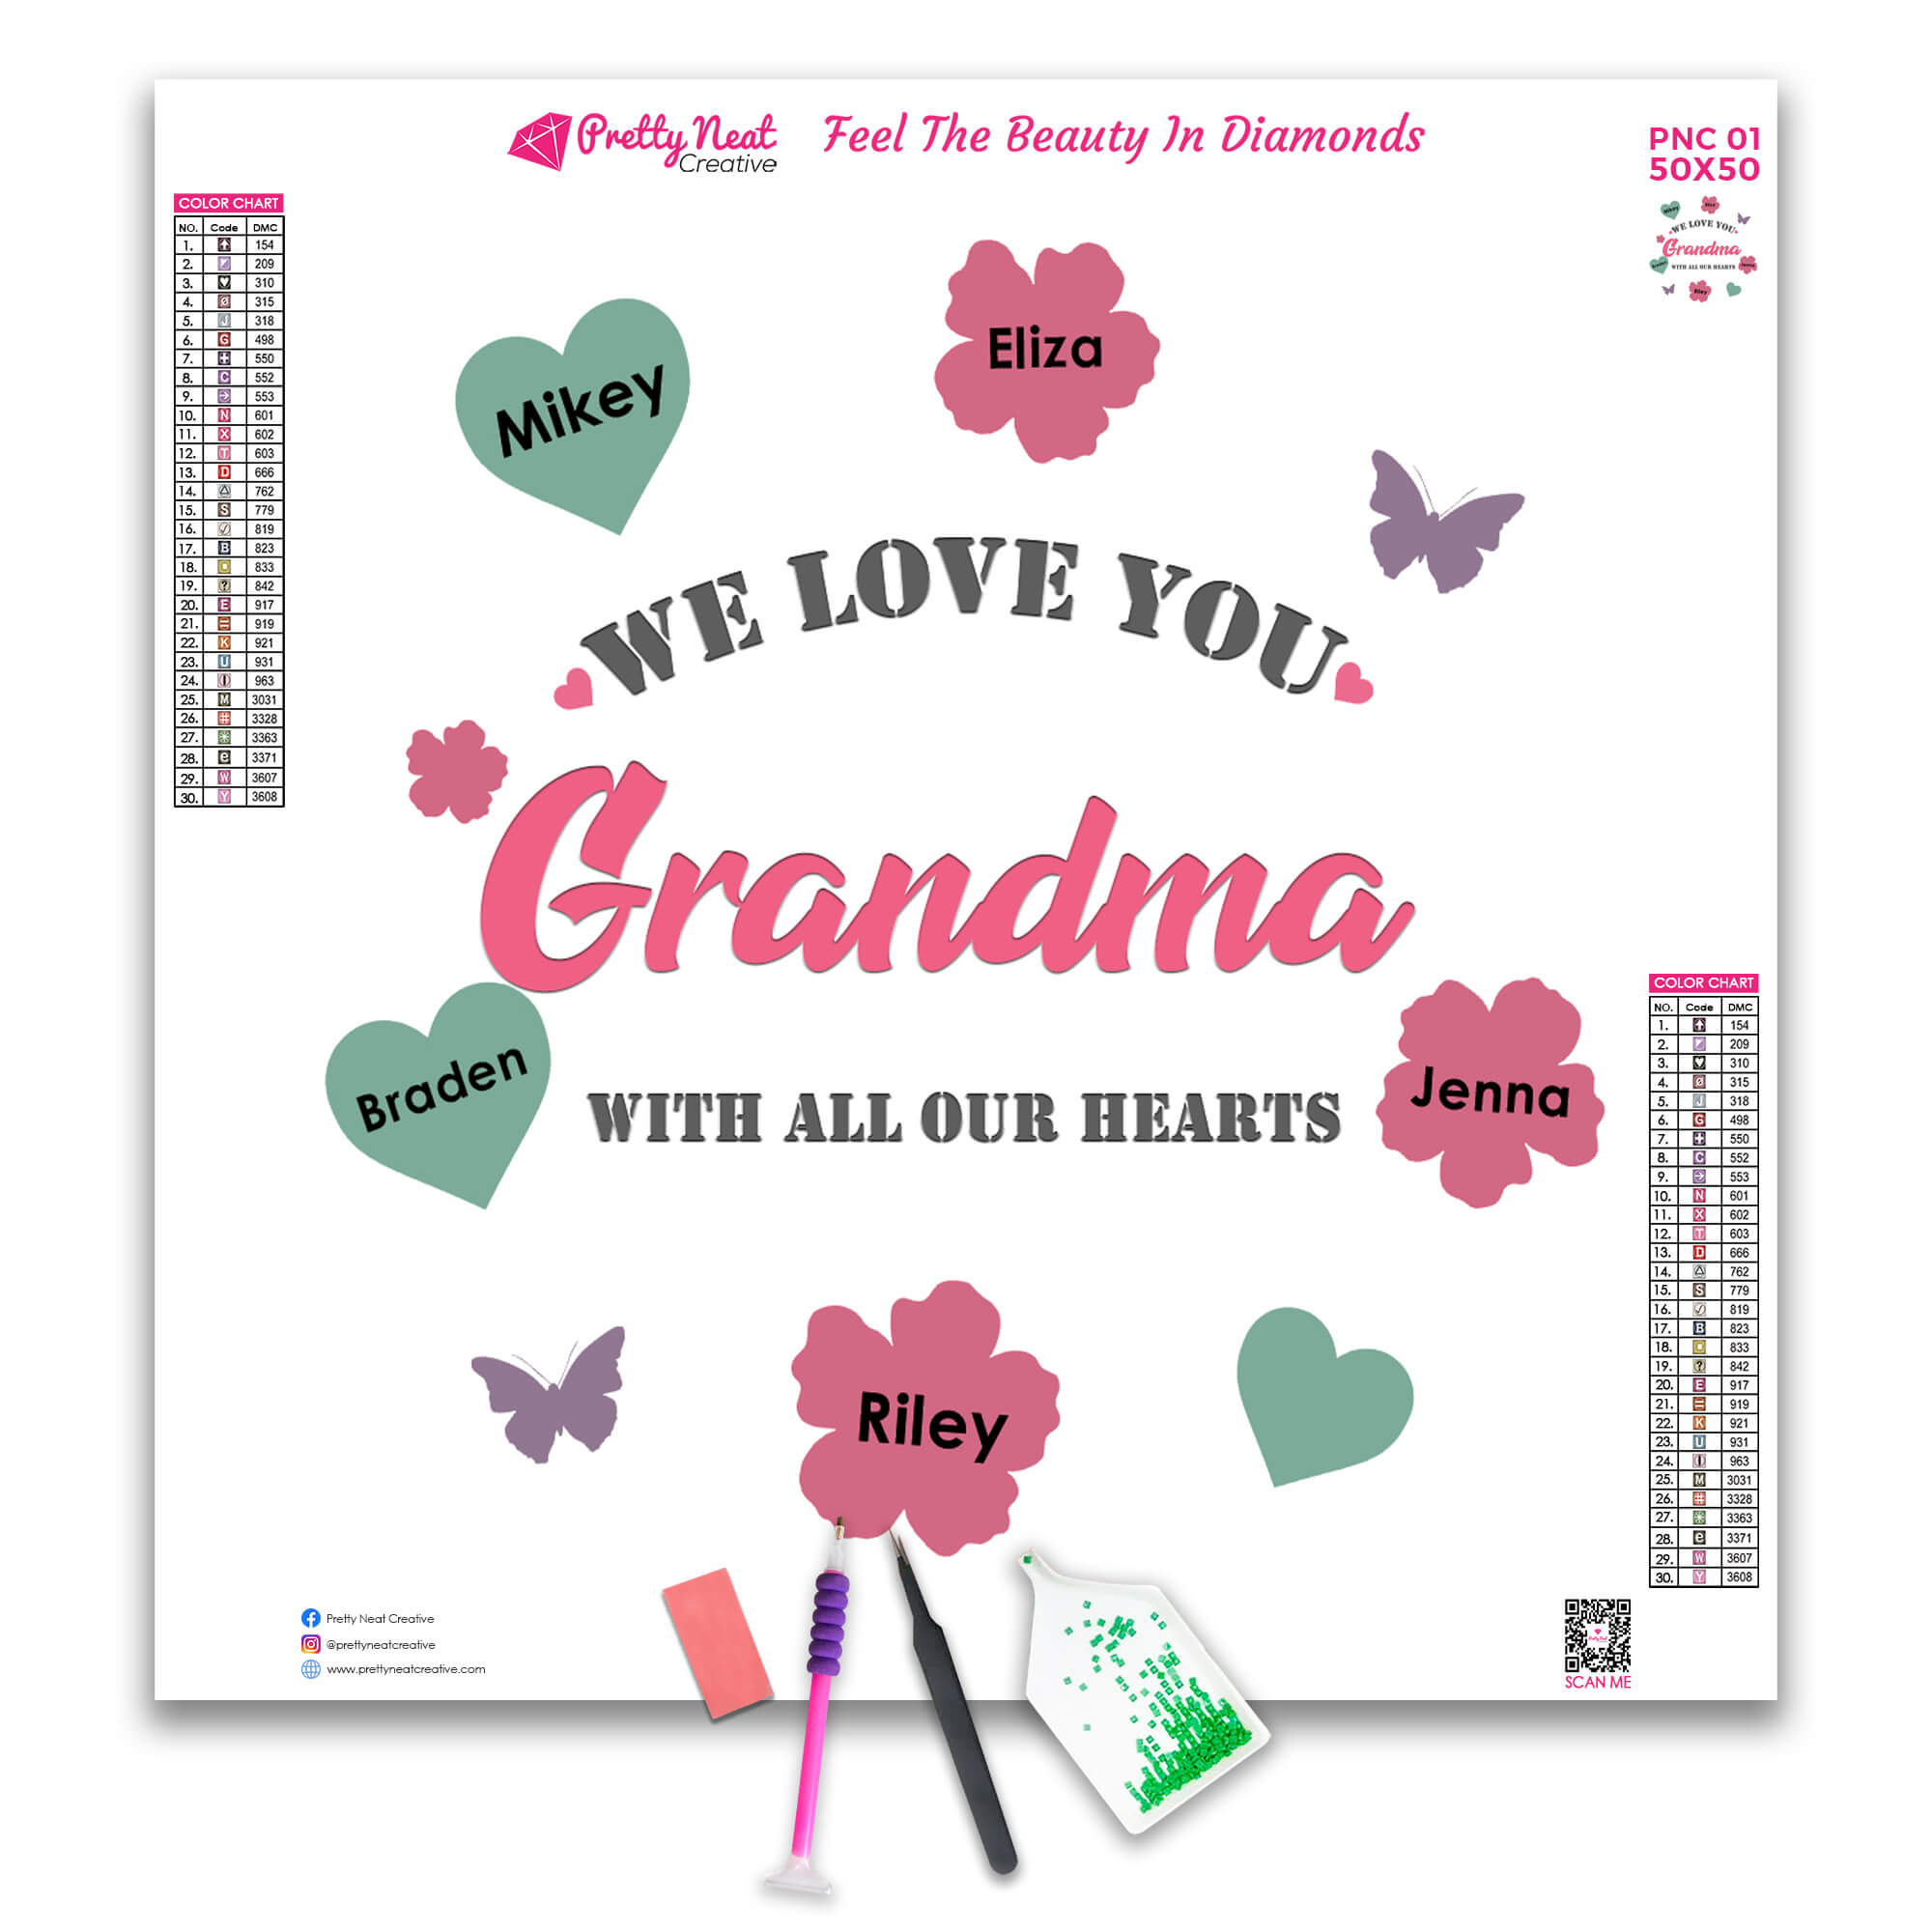 We love You, Grandma_mockup.